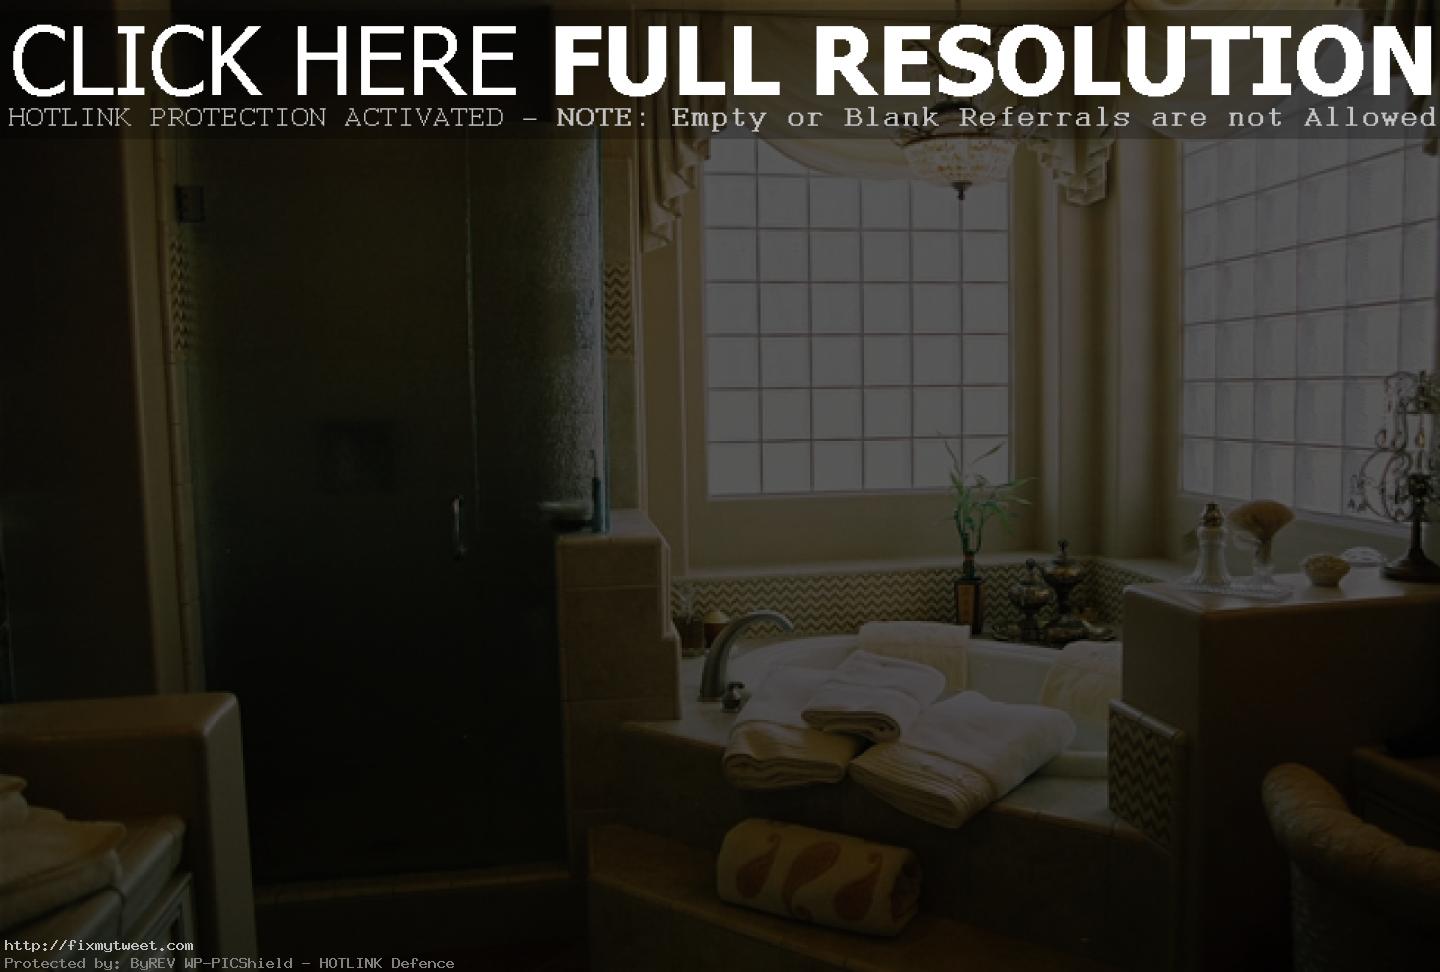 Luxury-Corner-Bathtub-Ideas-with-Blur-Glass-Tiled